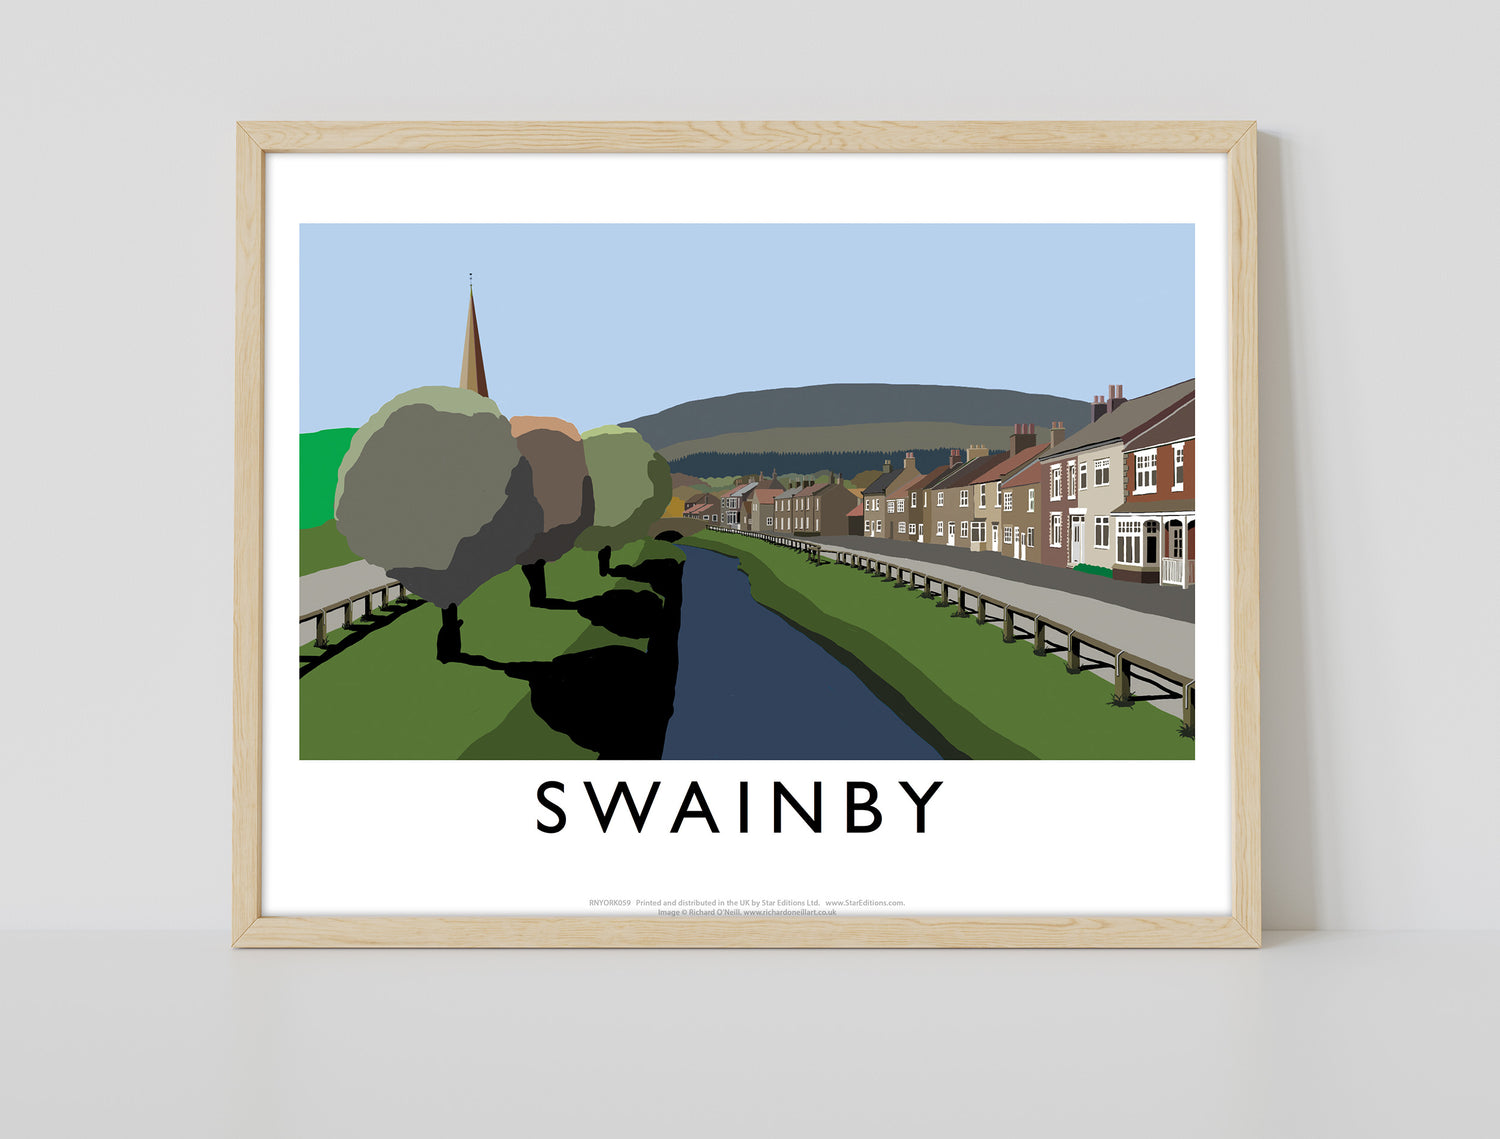 Swainby, Yorkshire - Art Print